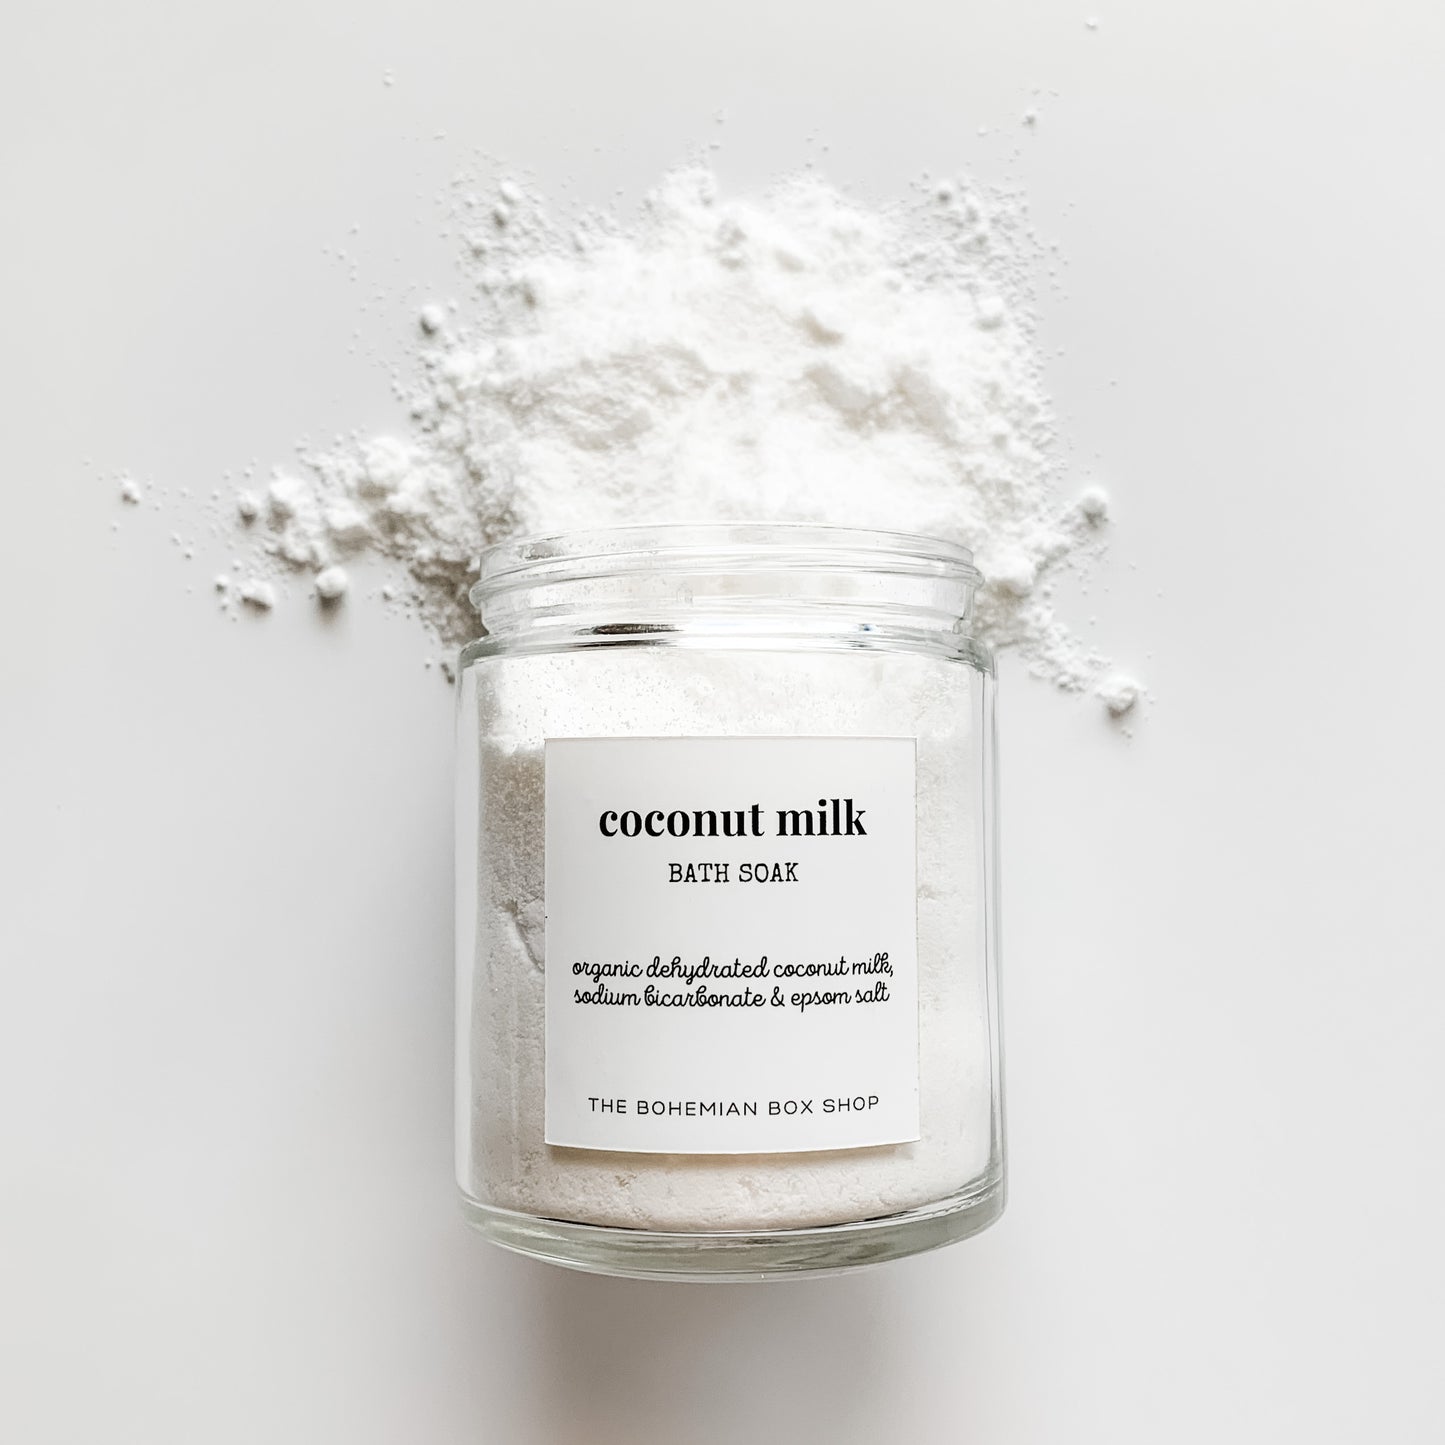 Coconut Milk Bath Soak in a clear jar with white label